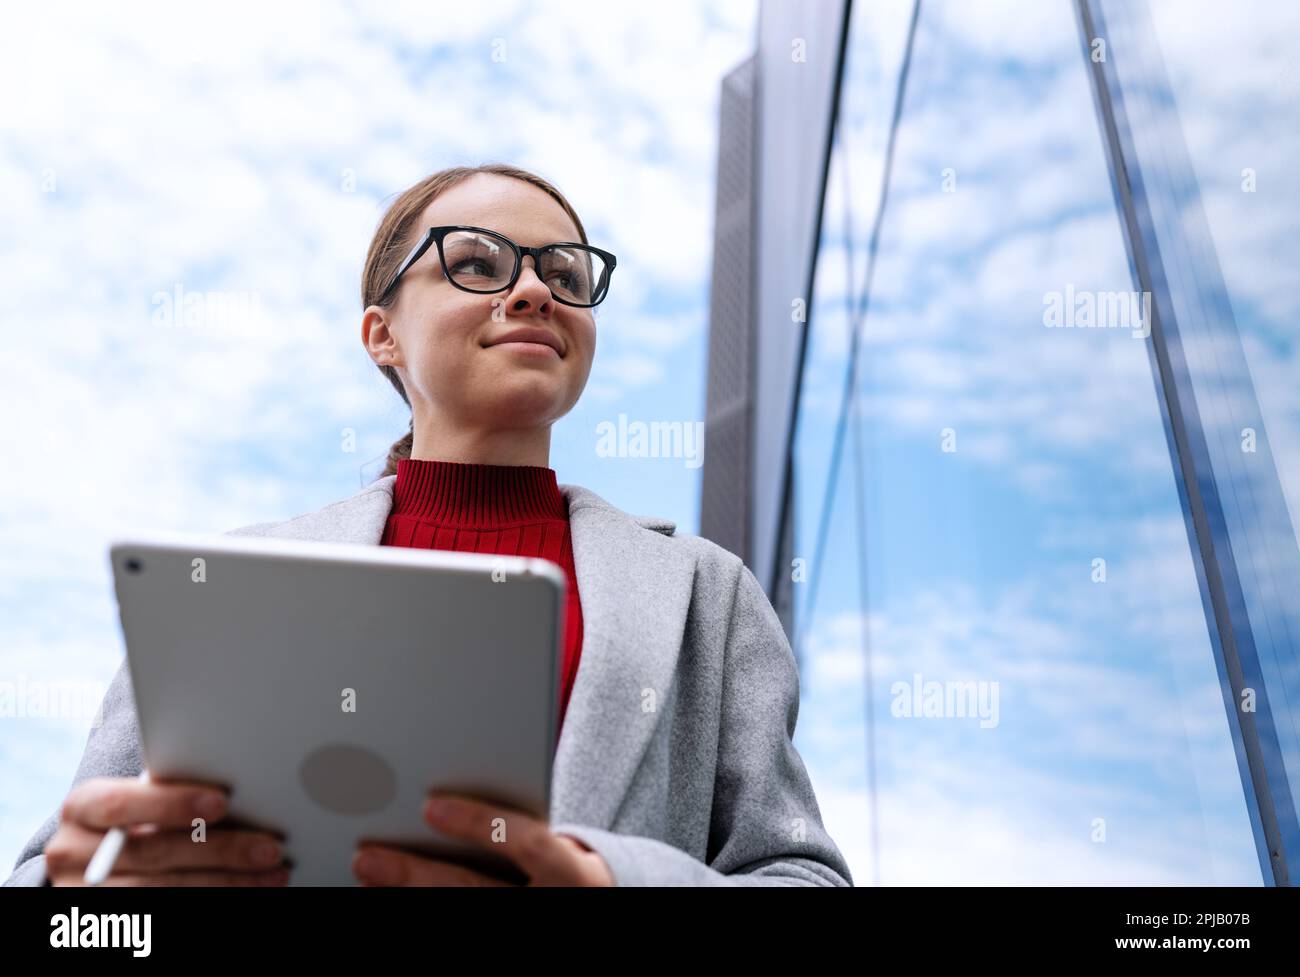 Woman successful employee, career development concept. Stock Photo